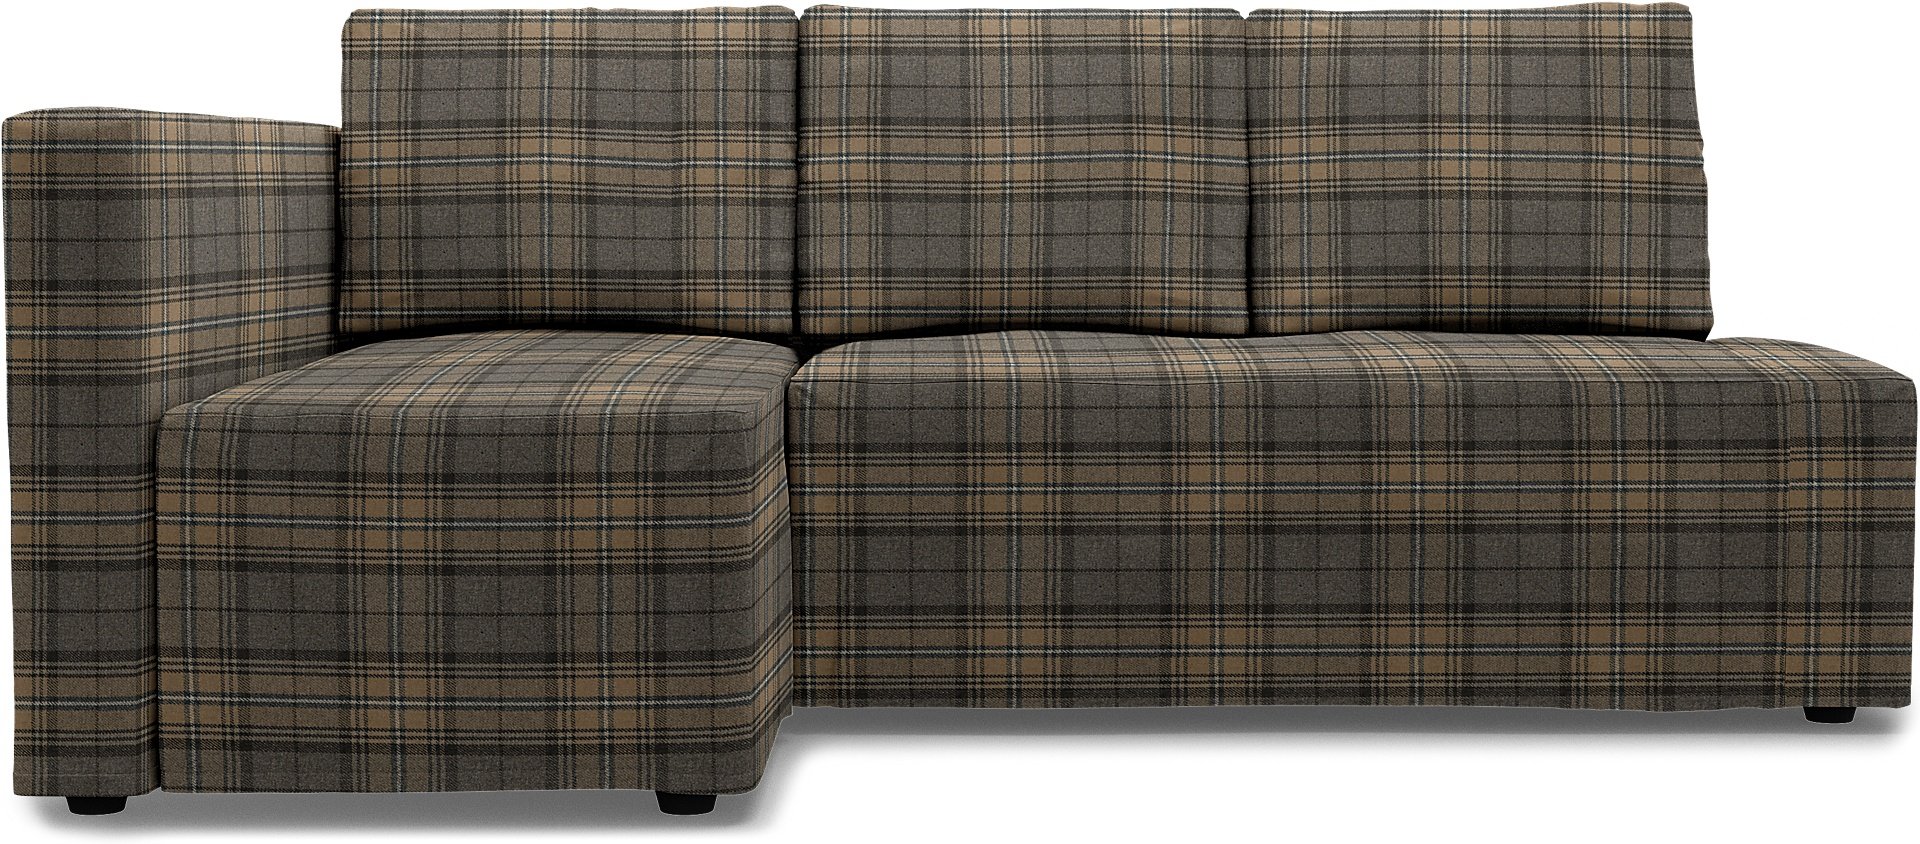 IKEA - Friheten Sofa Bed with Left Chaise Cover, Bark Brown, Wool - Bemz